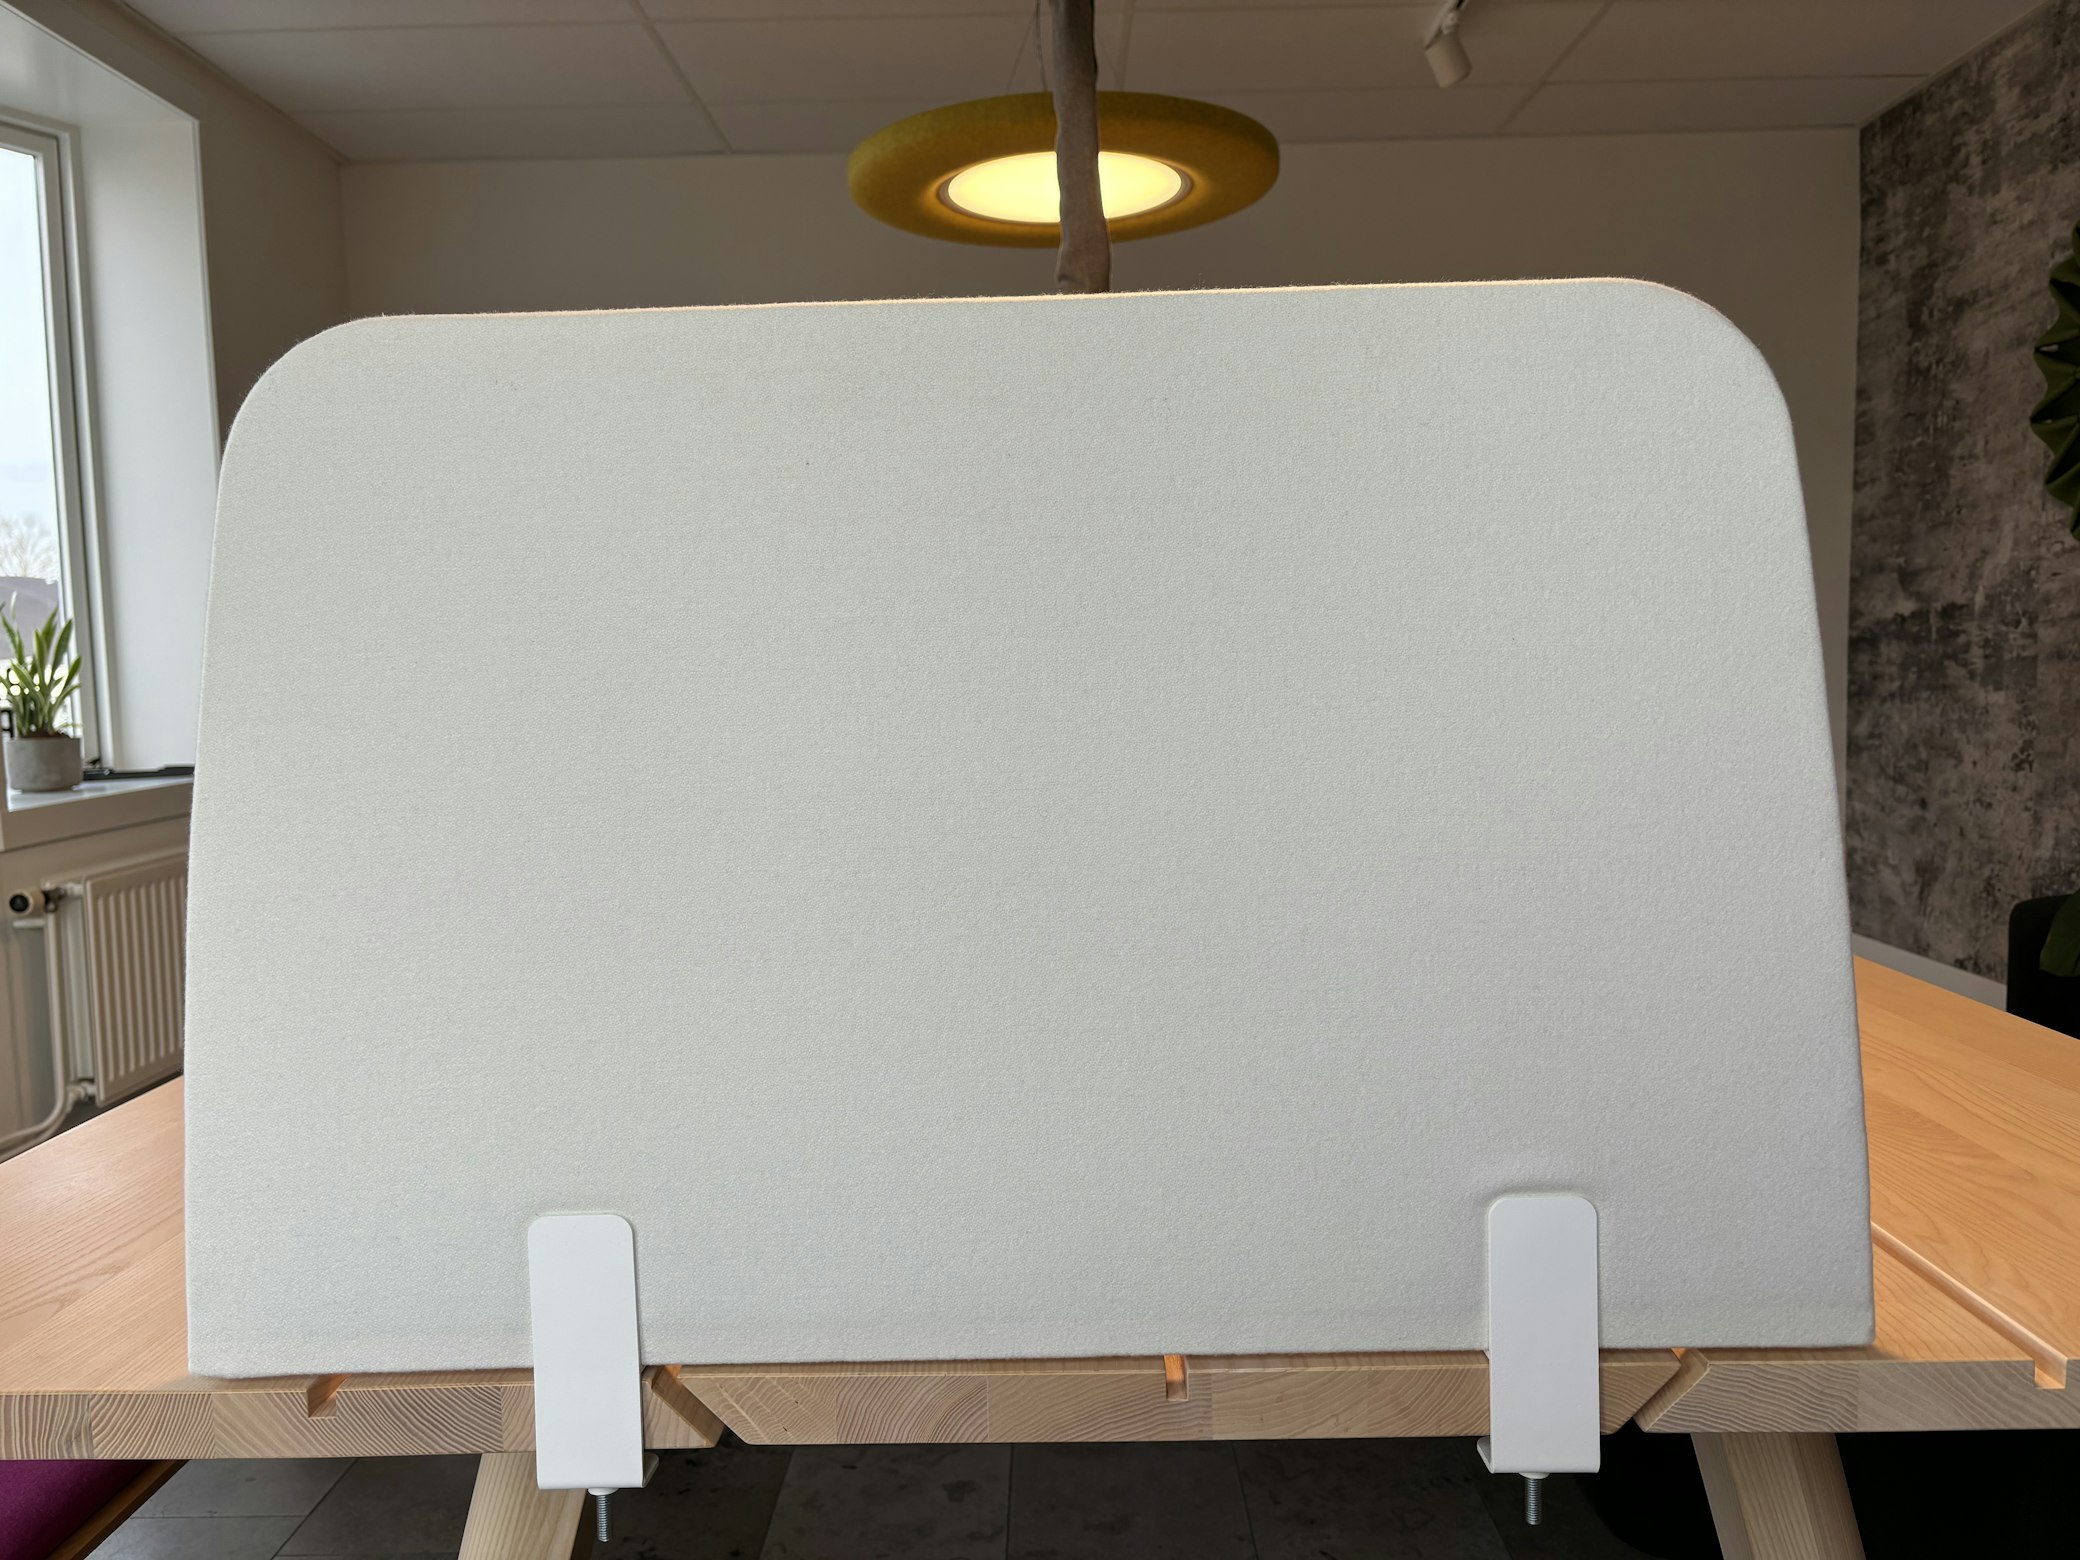 Buzzispace buzziredesk sustainable desk divider